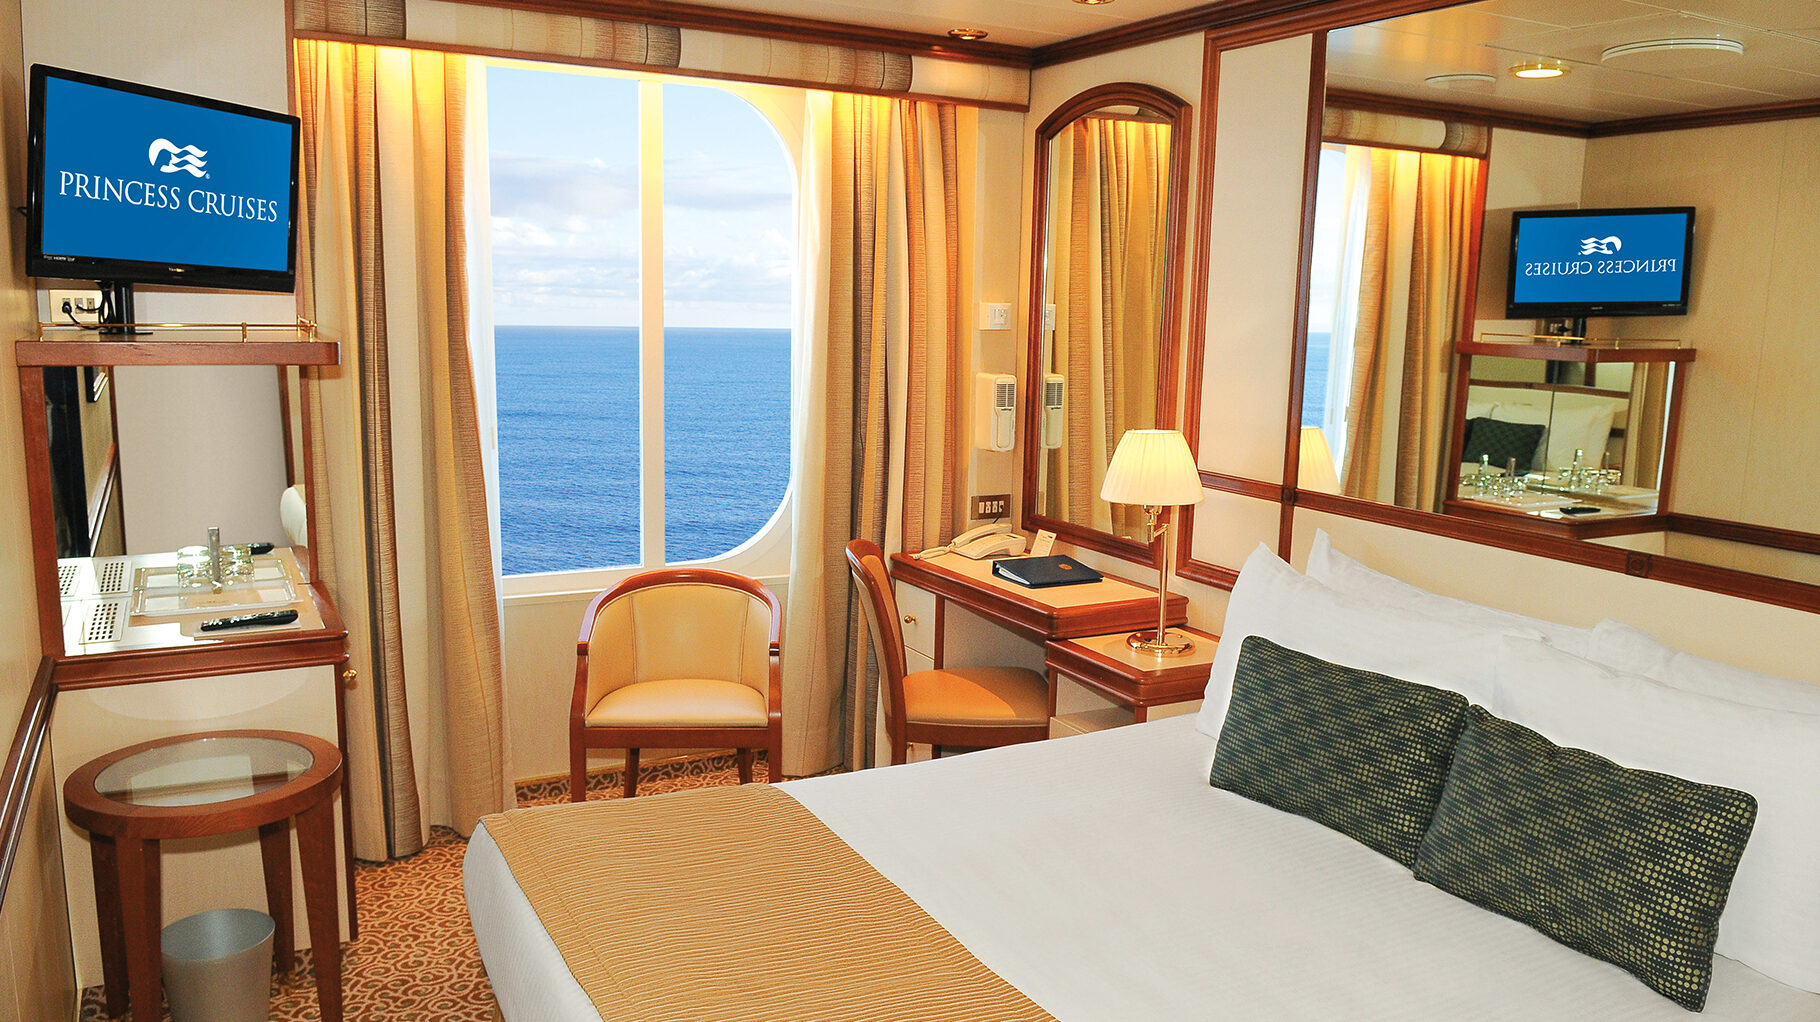 Oceanview suite on Princess